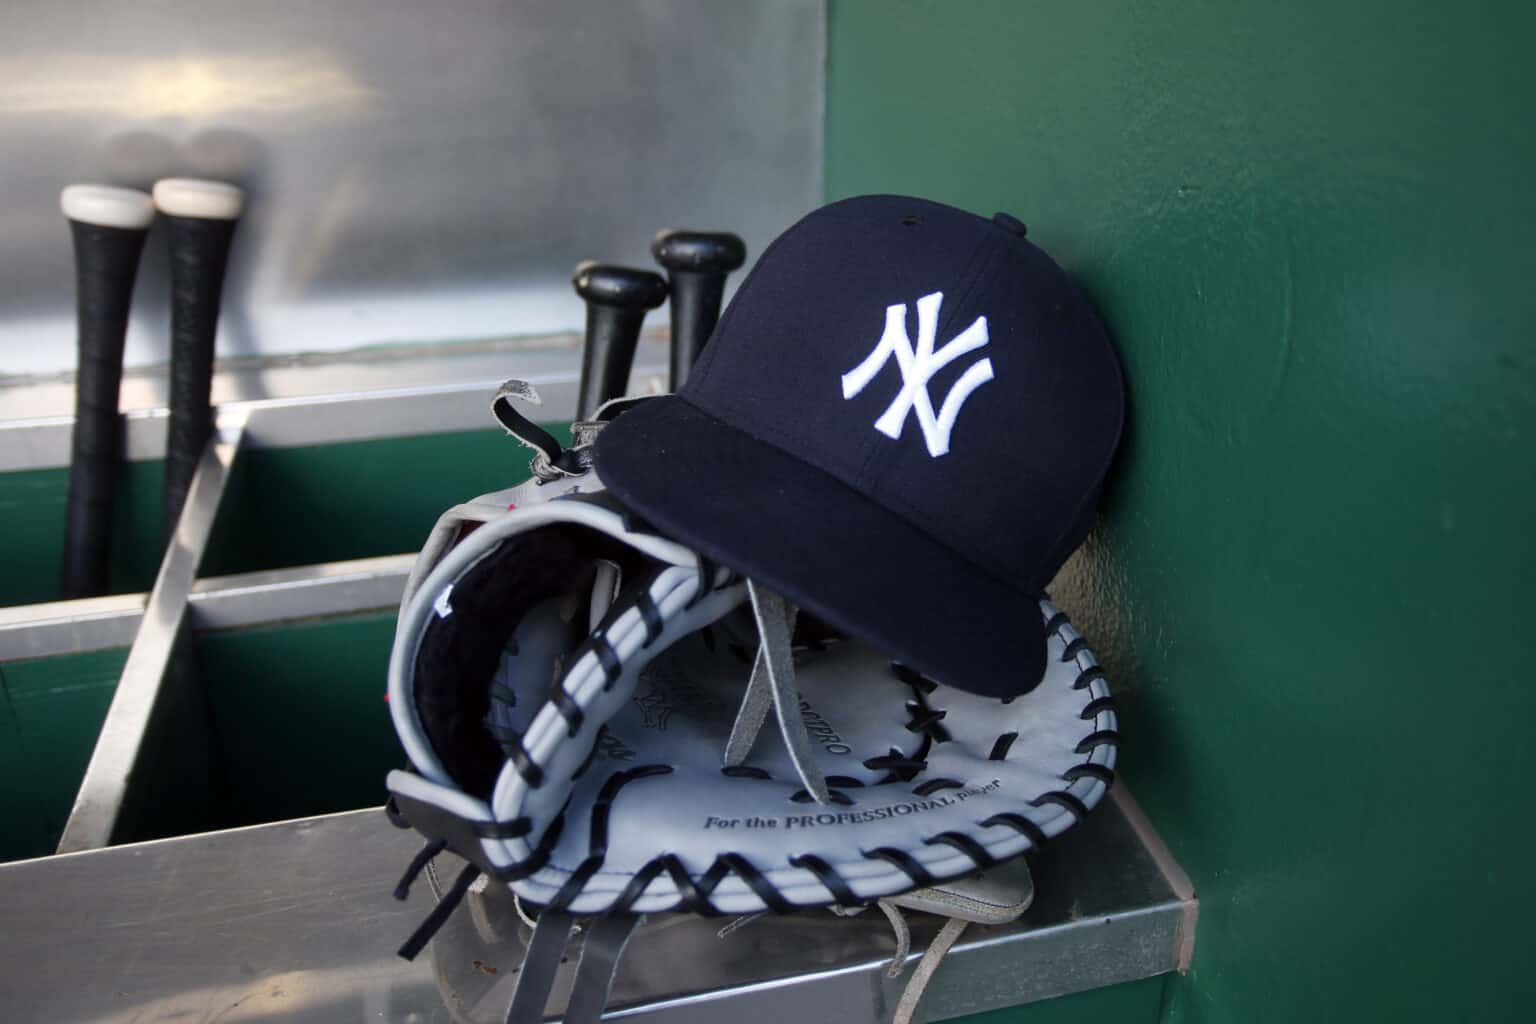 Yankees Hat and Baseball Glove